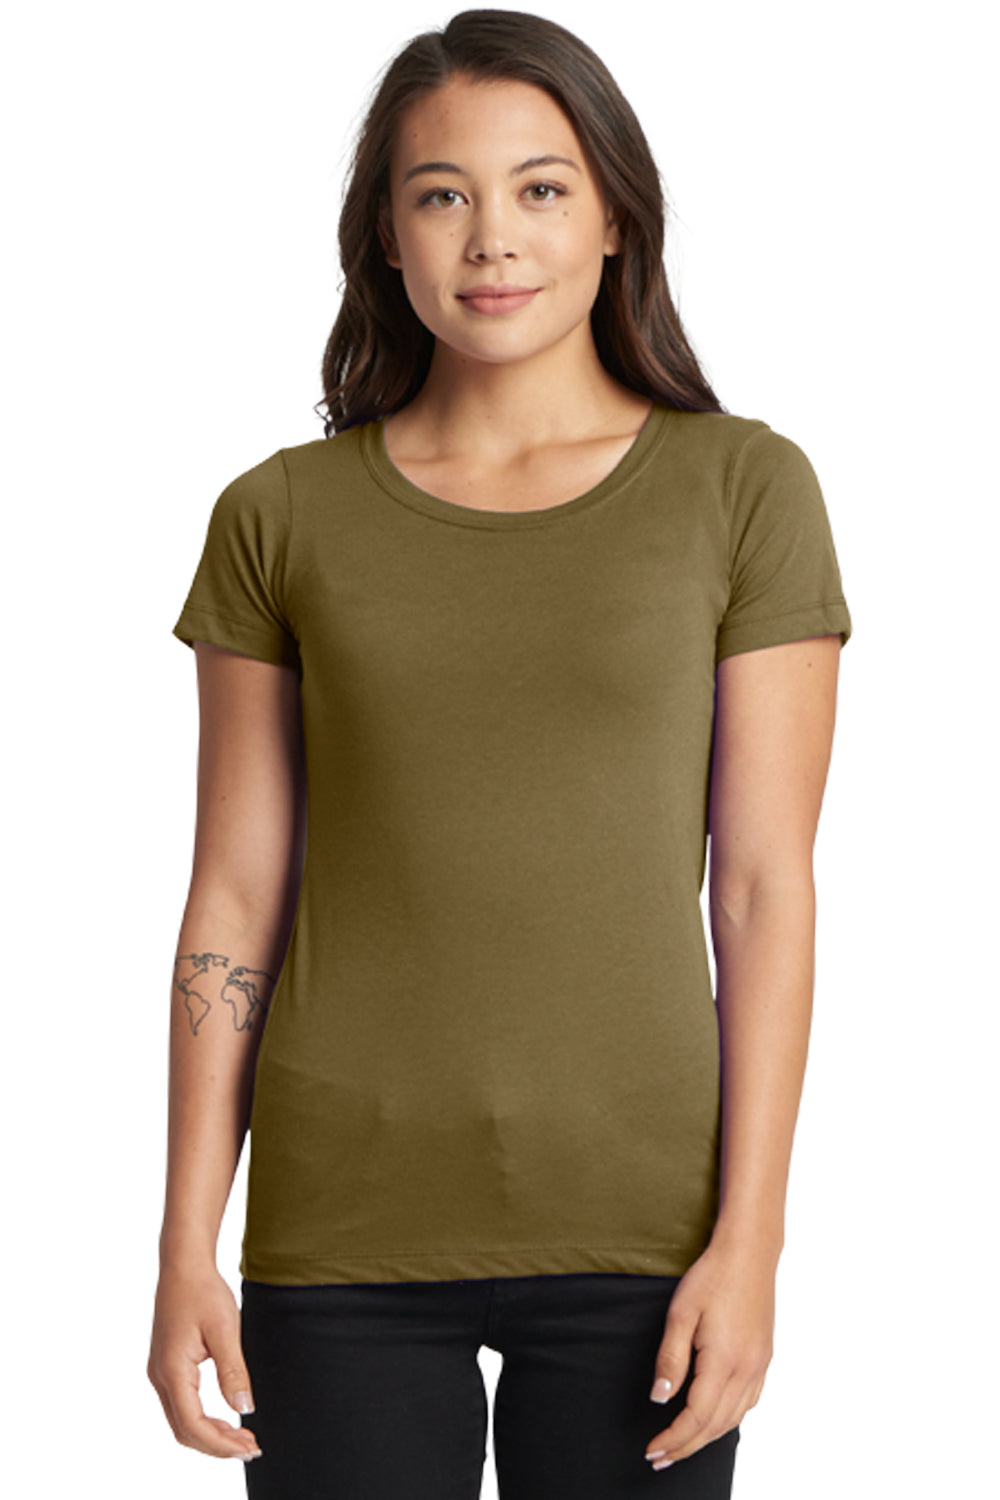 Next Level N1510 Womens Ideal Jersey Short Sleeve Crewneck T-Shirt Military Green Front